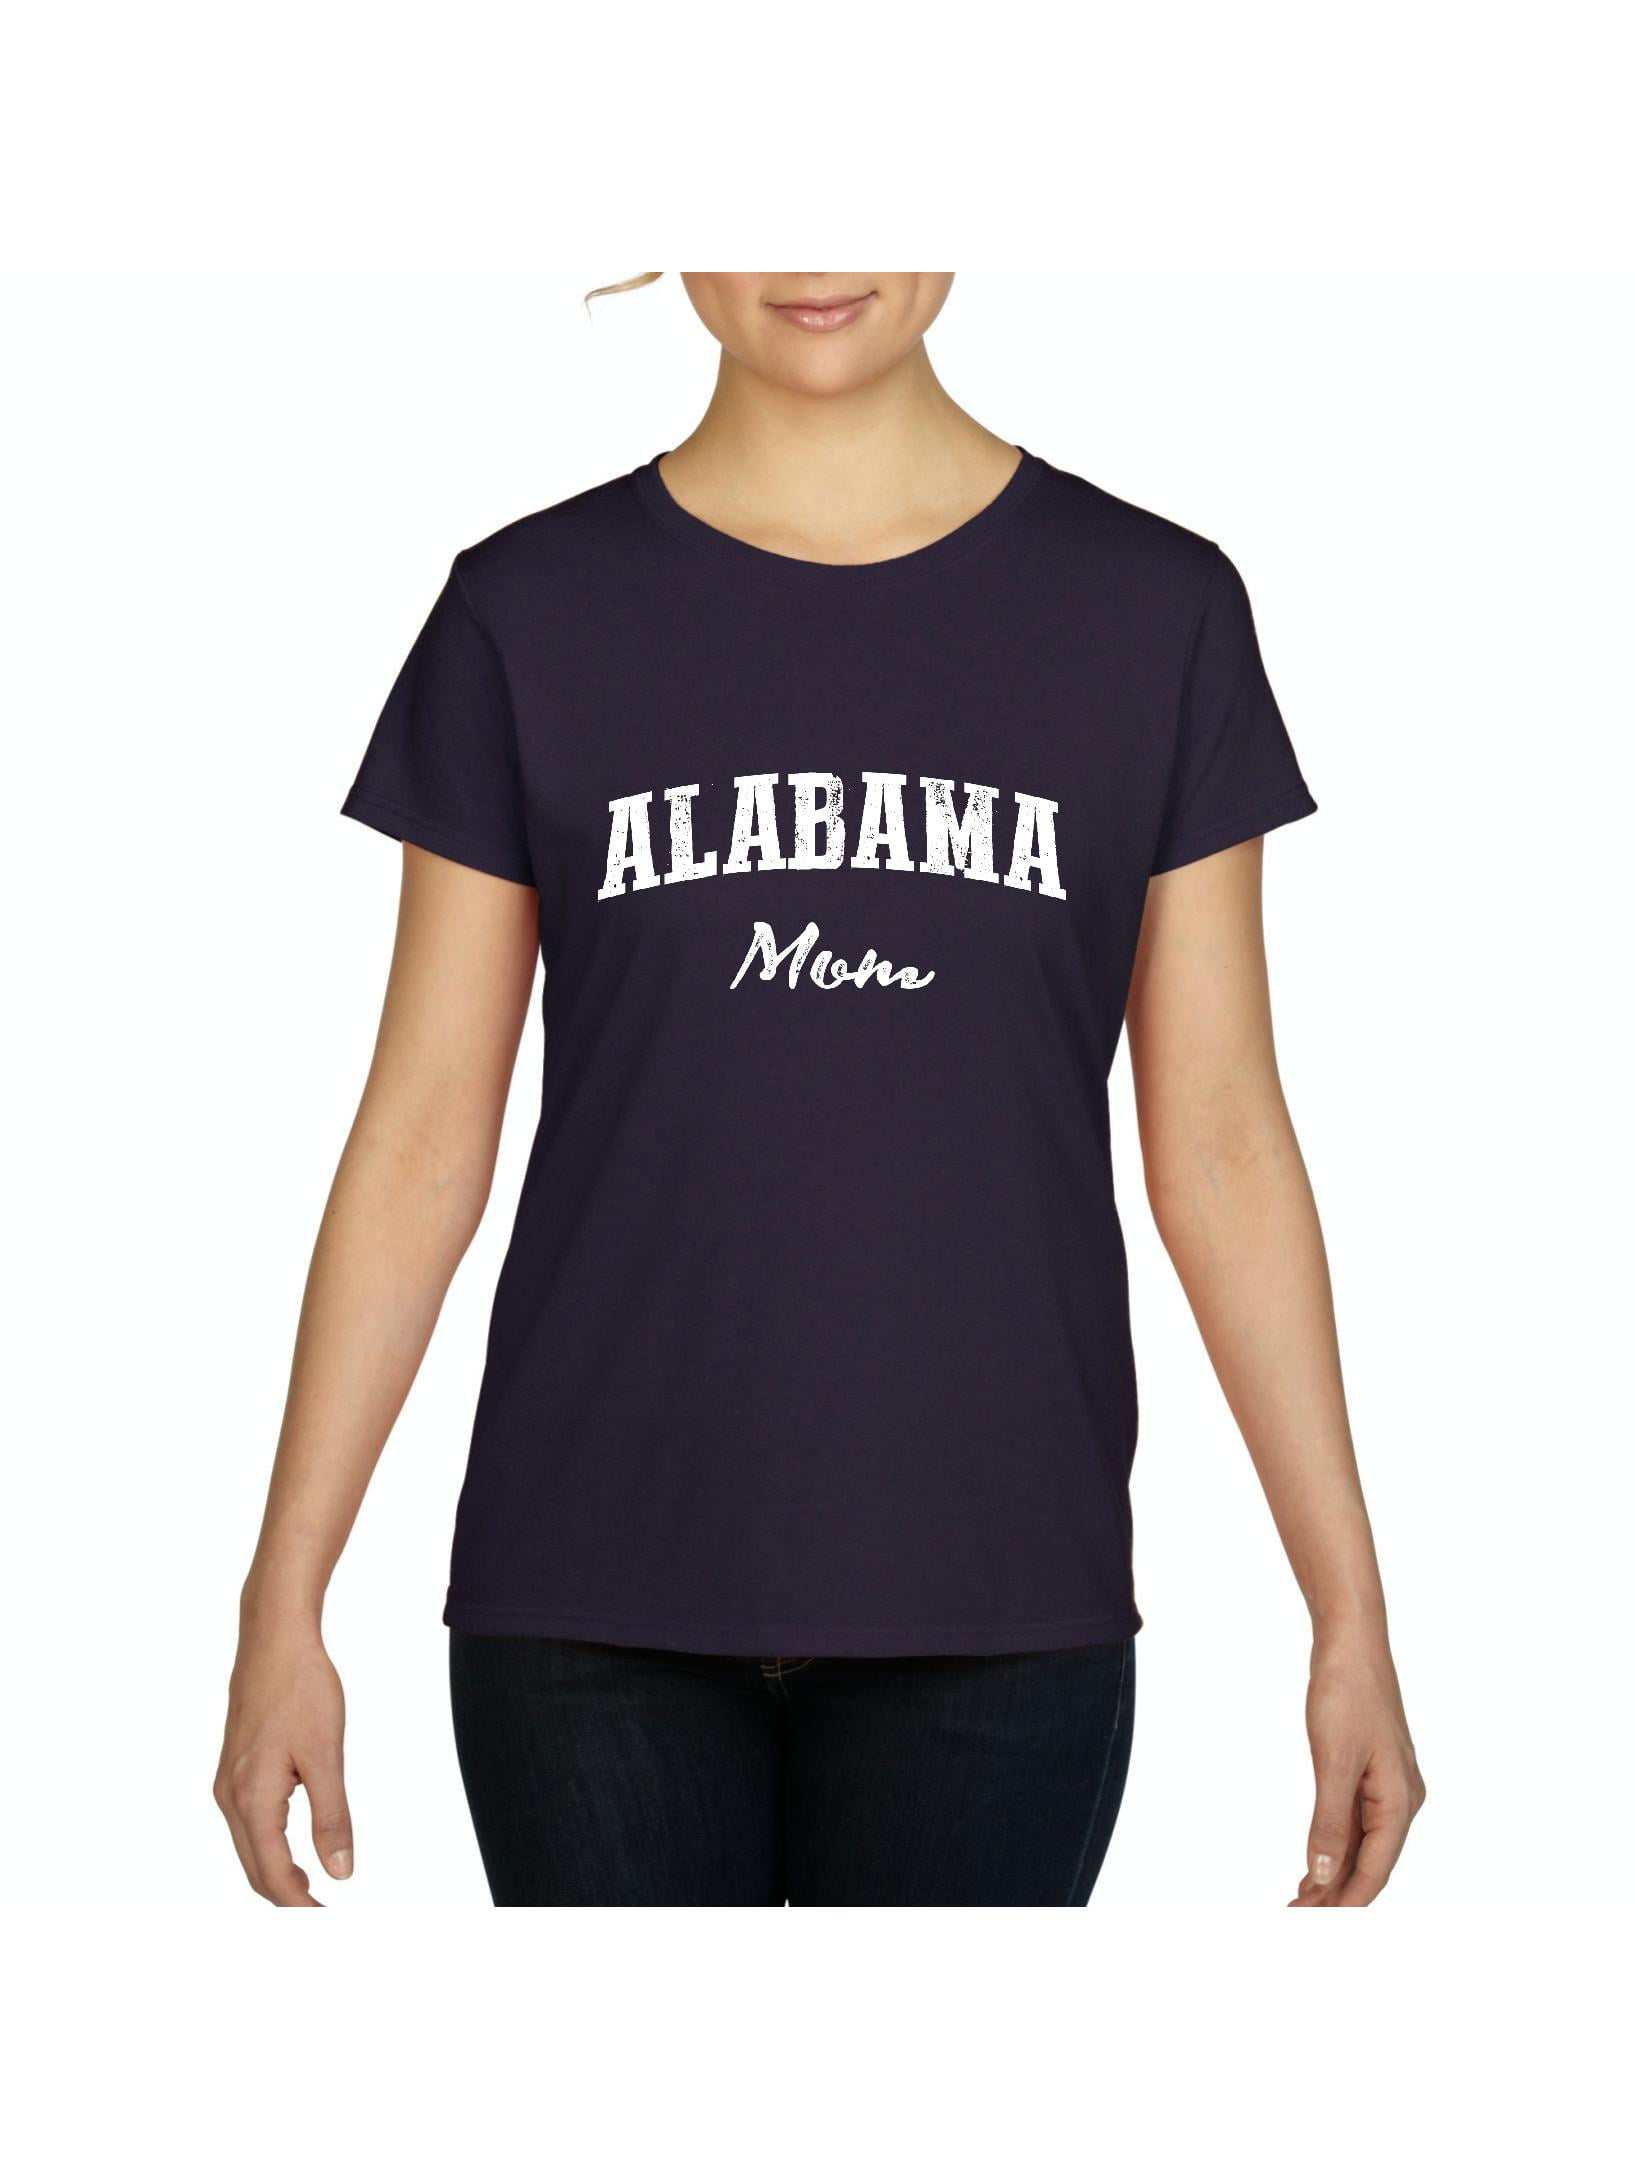 alabama mom shirt